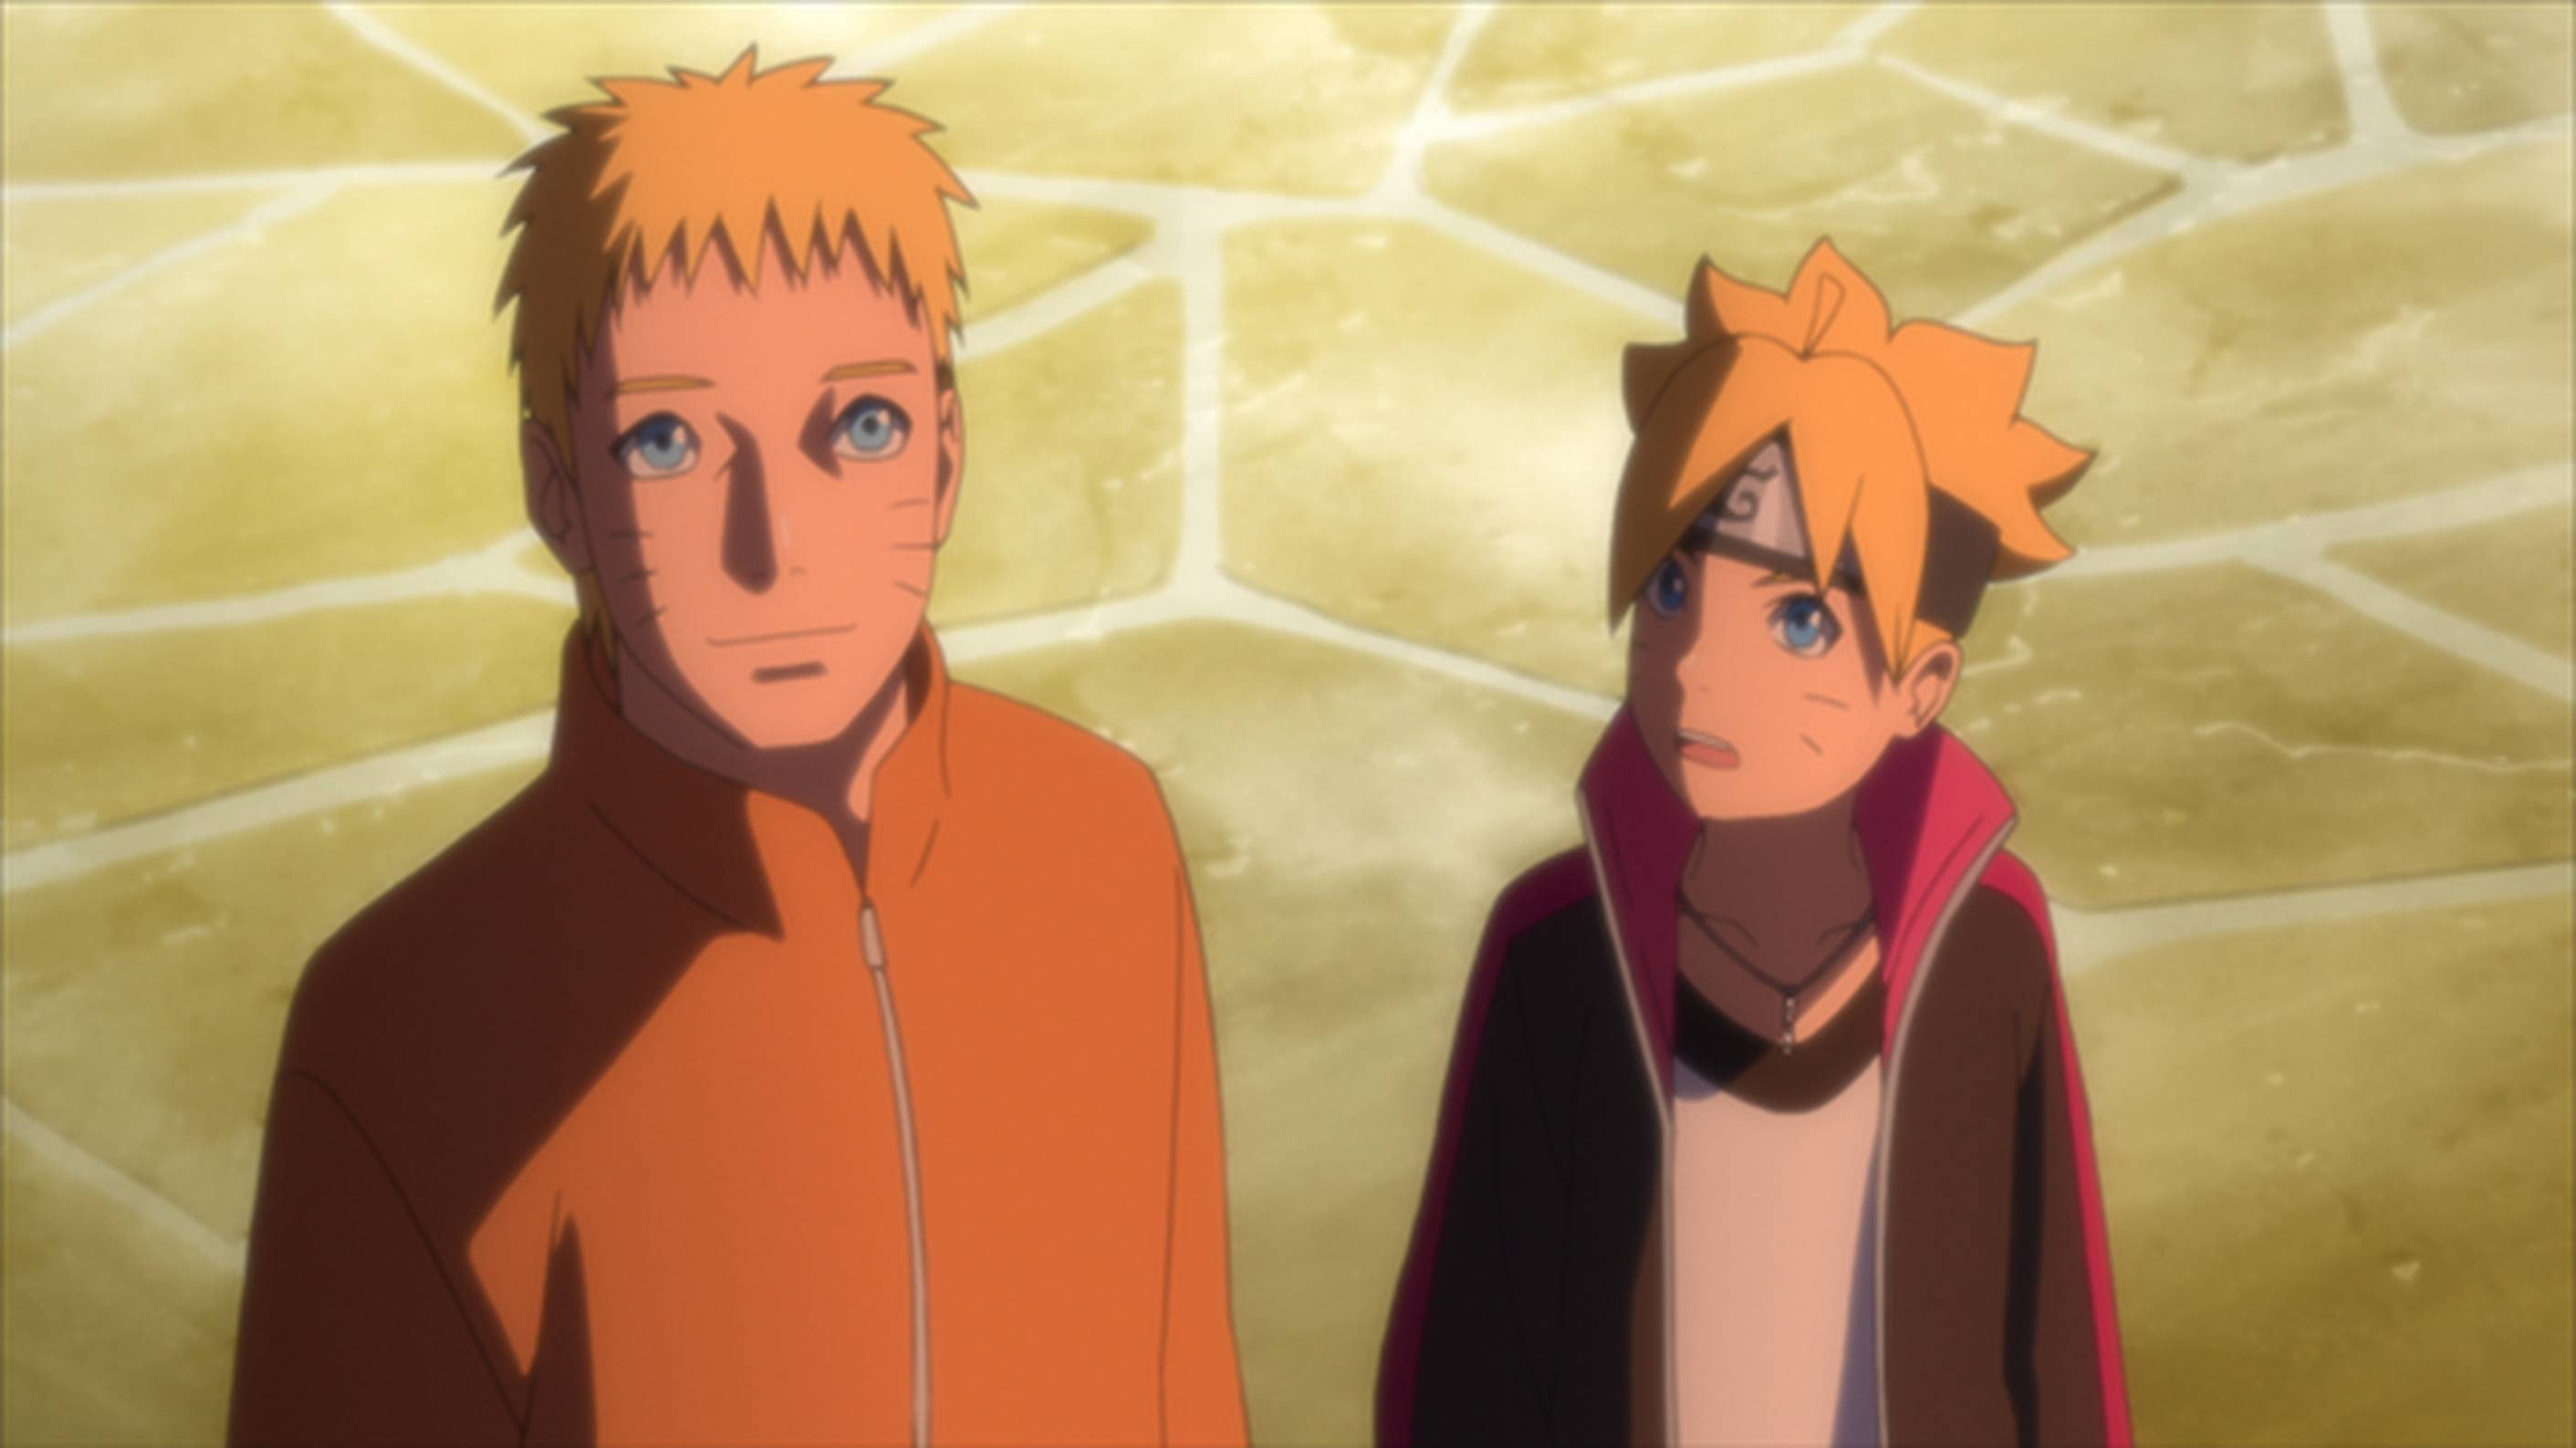 Boruto ボルト Naruto Next Generations 第71話 世界で一番固い石 アニメ 17 の動画視聴 U Next 31日間無料トライアル